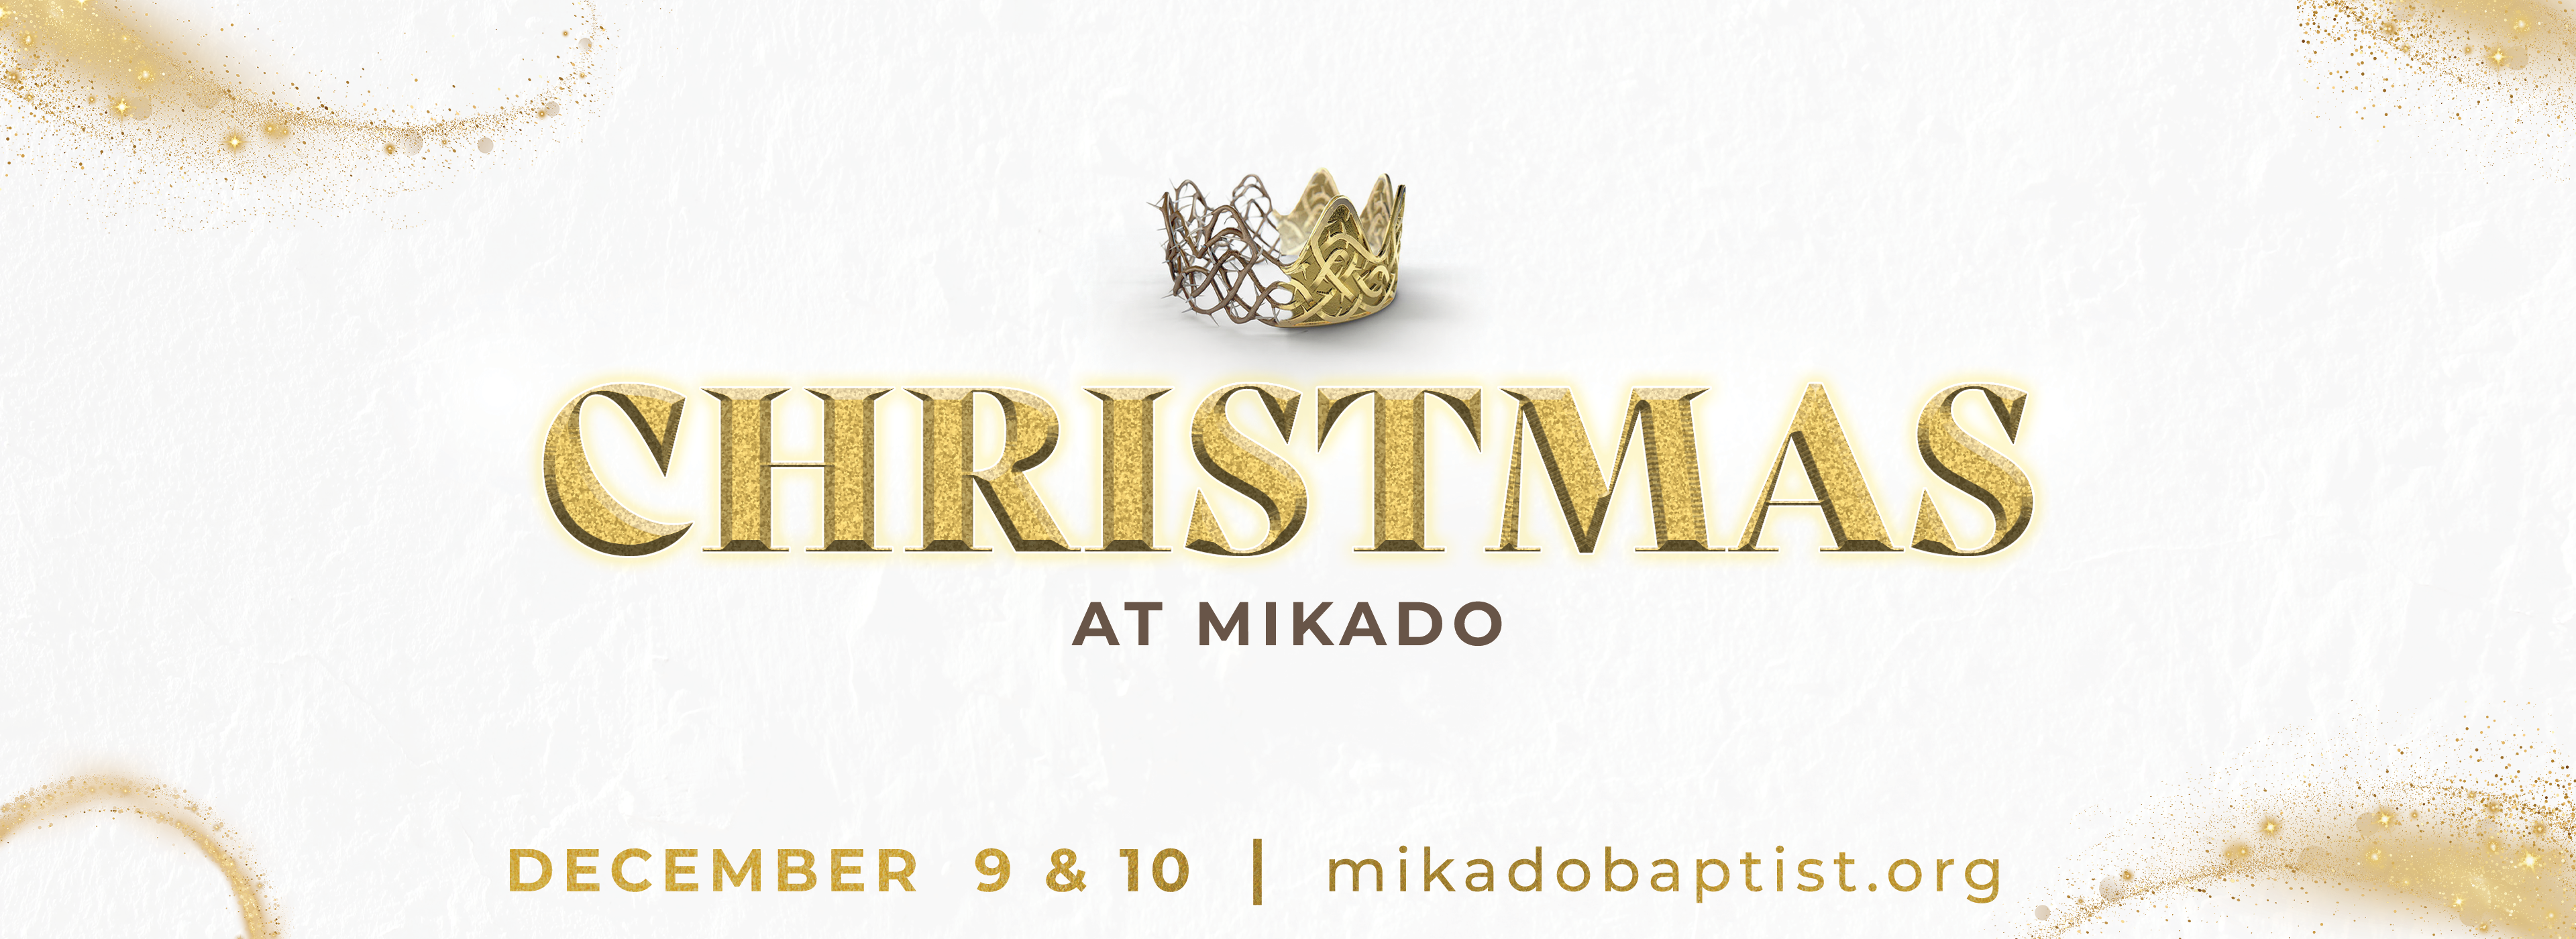 Christmas at Mikado - web